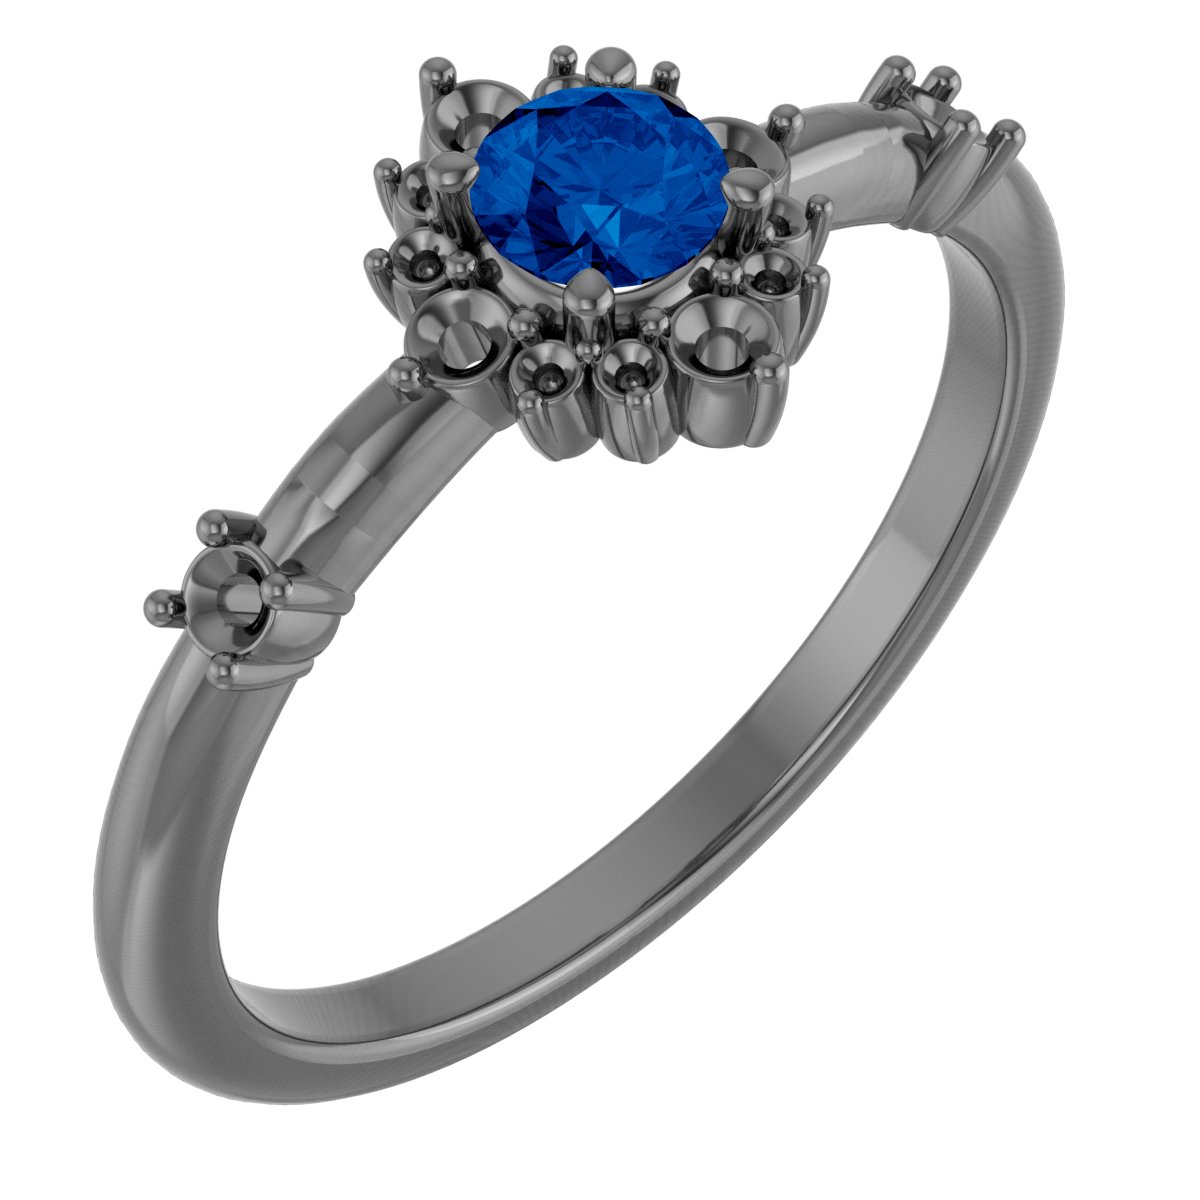 14K Rose Blue Sapphire and .167 CTW Diamond Ring Ref. 15641451